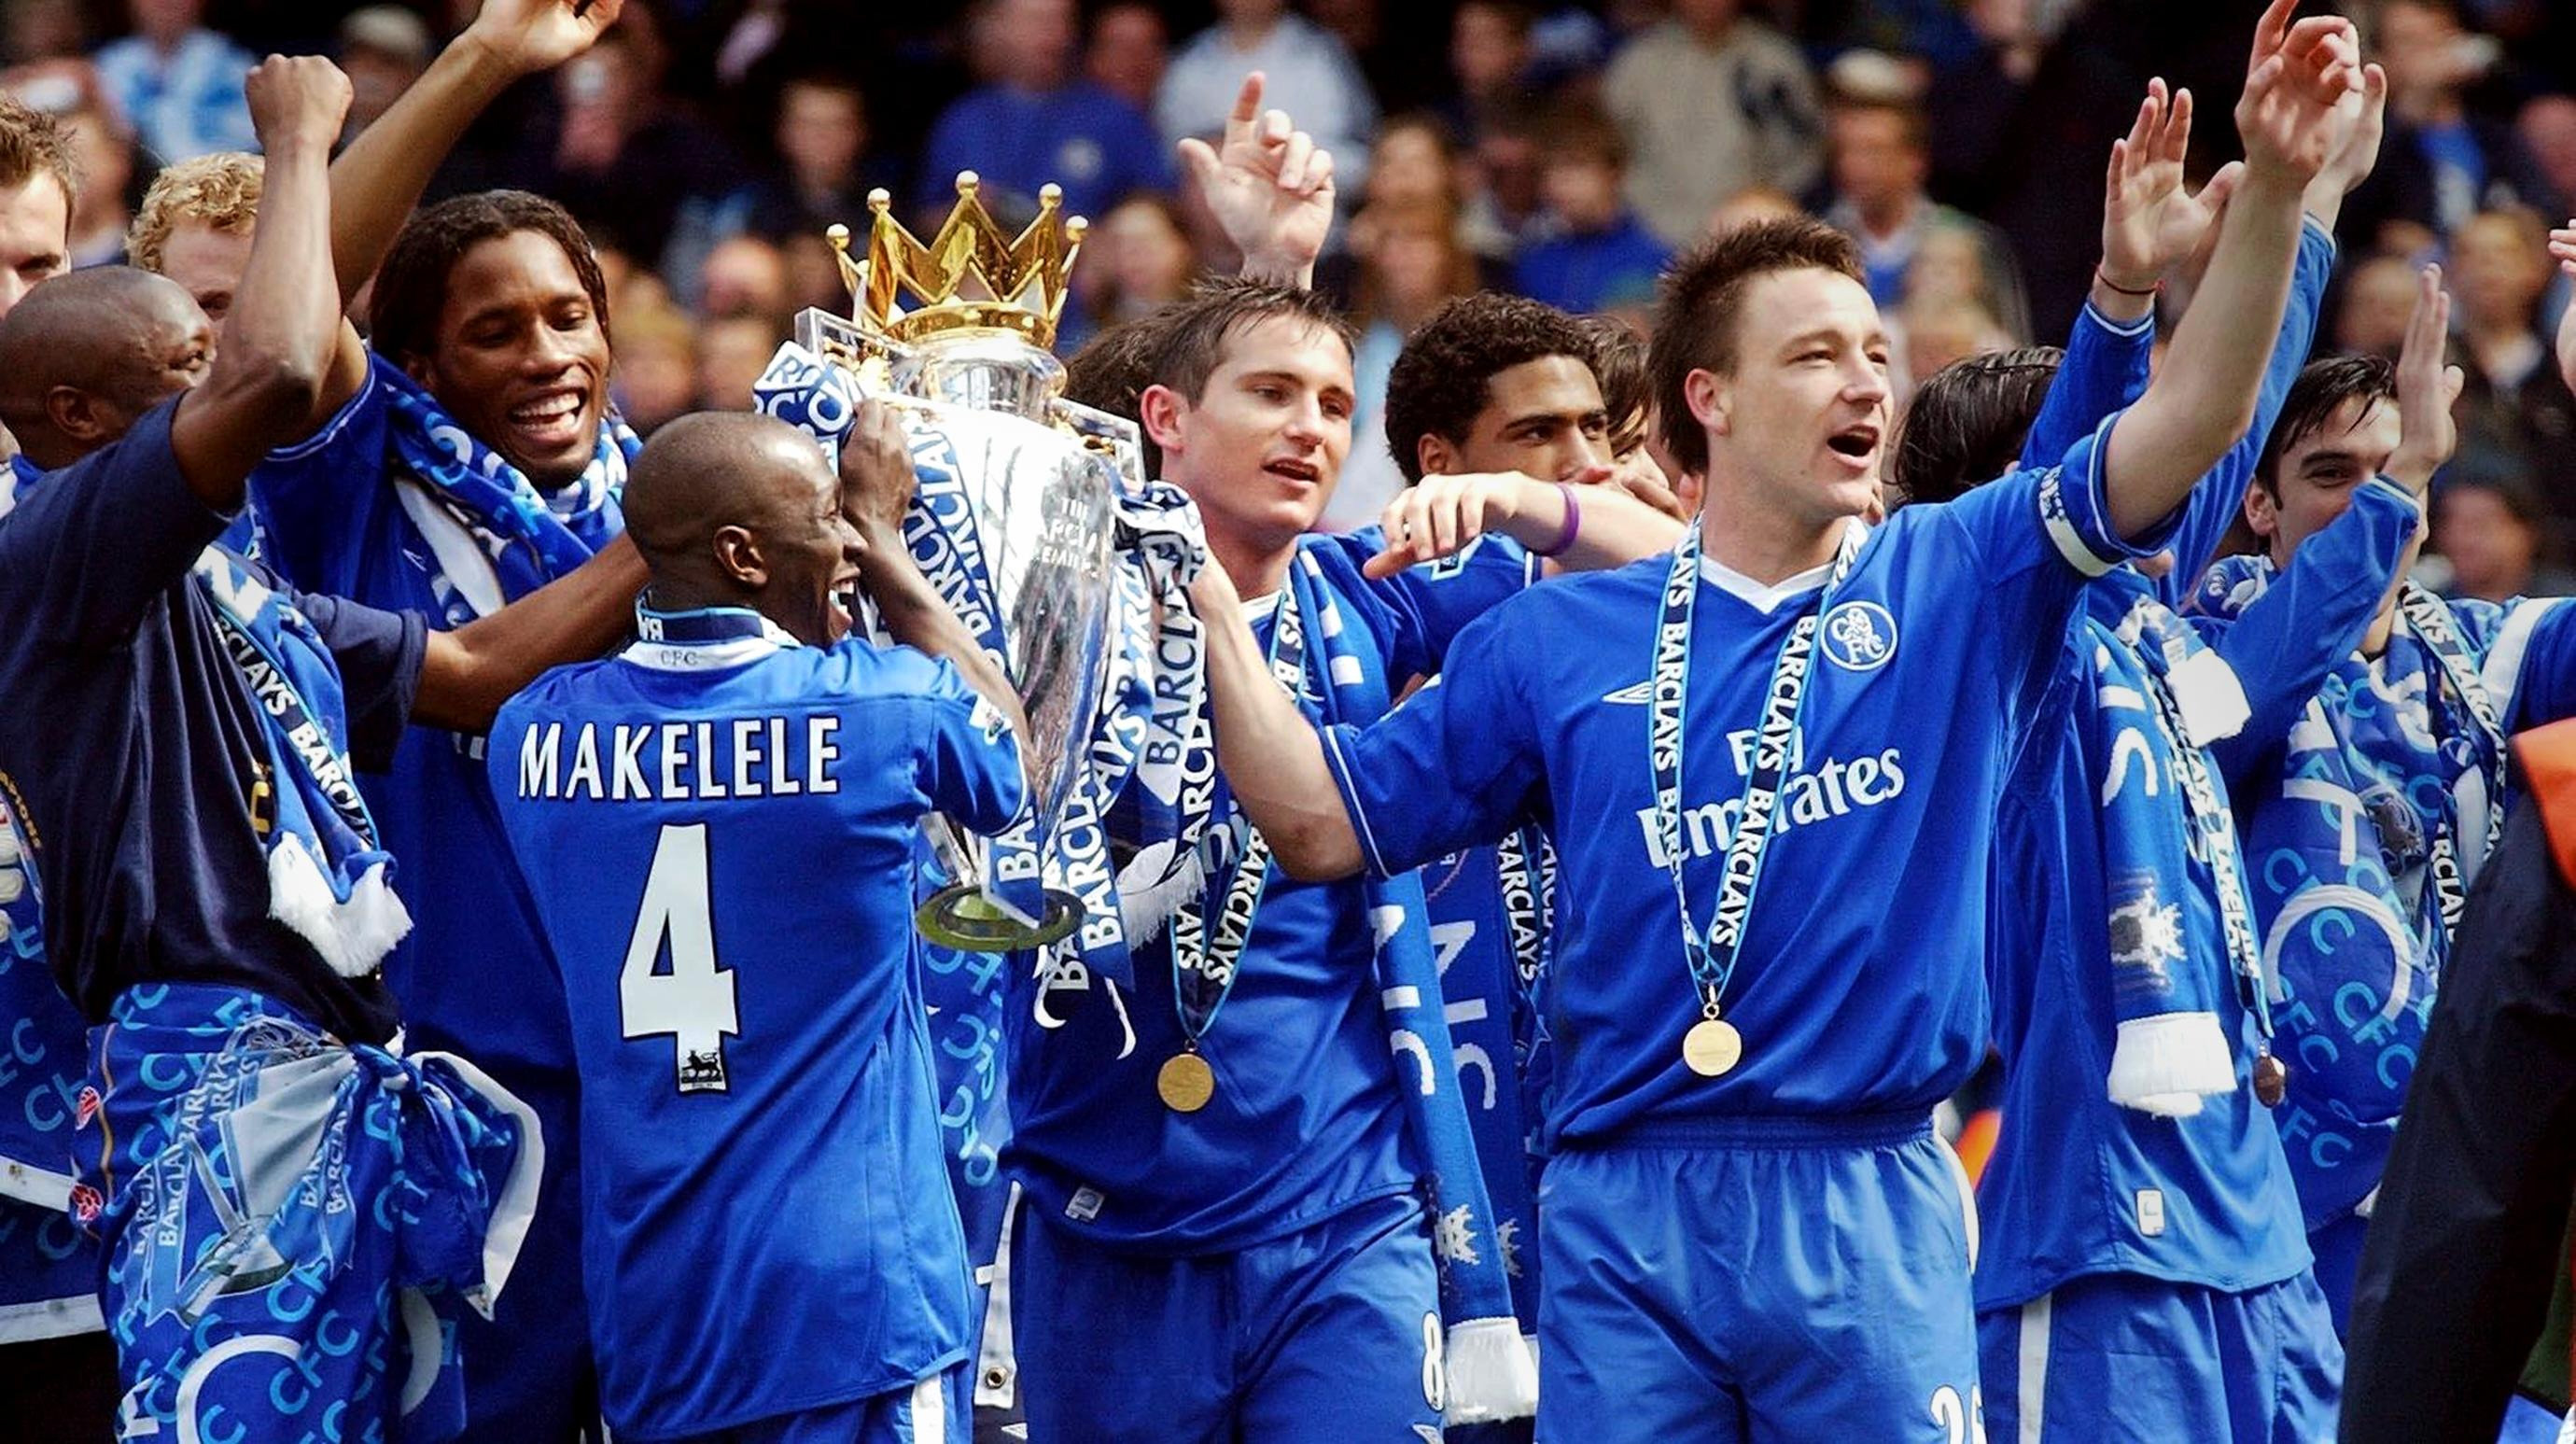 Chelsea's 2004/05 team celebrate winning the Premier League title